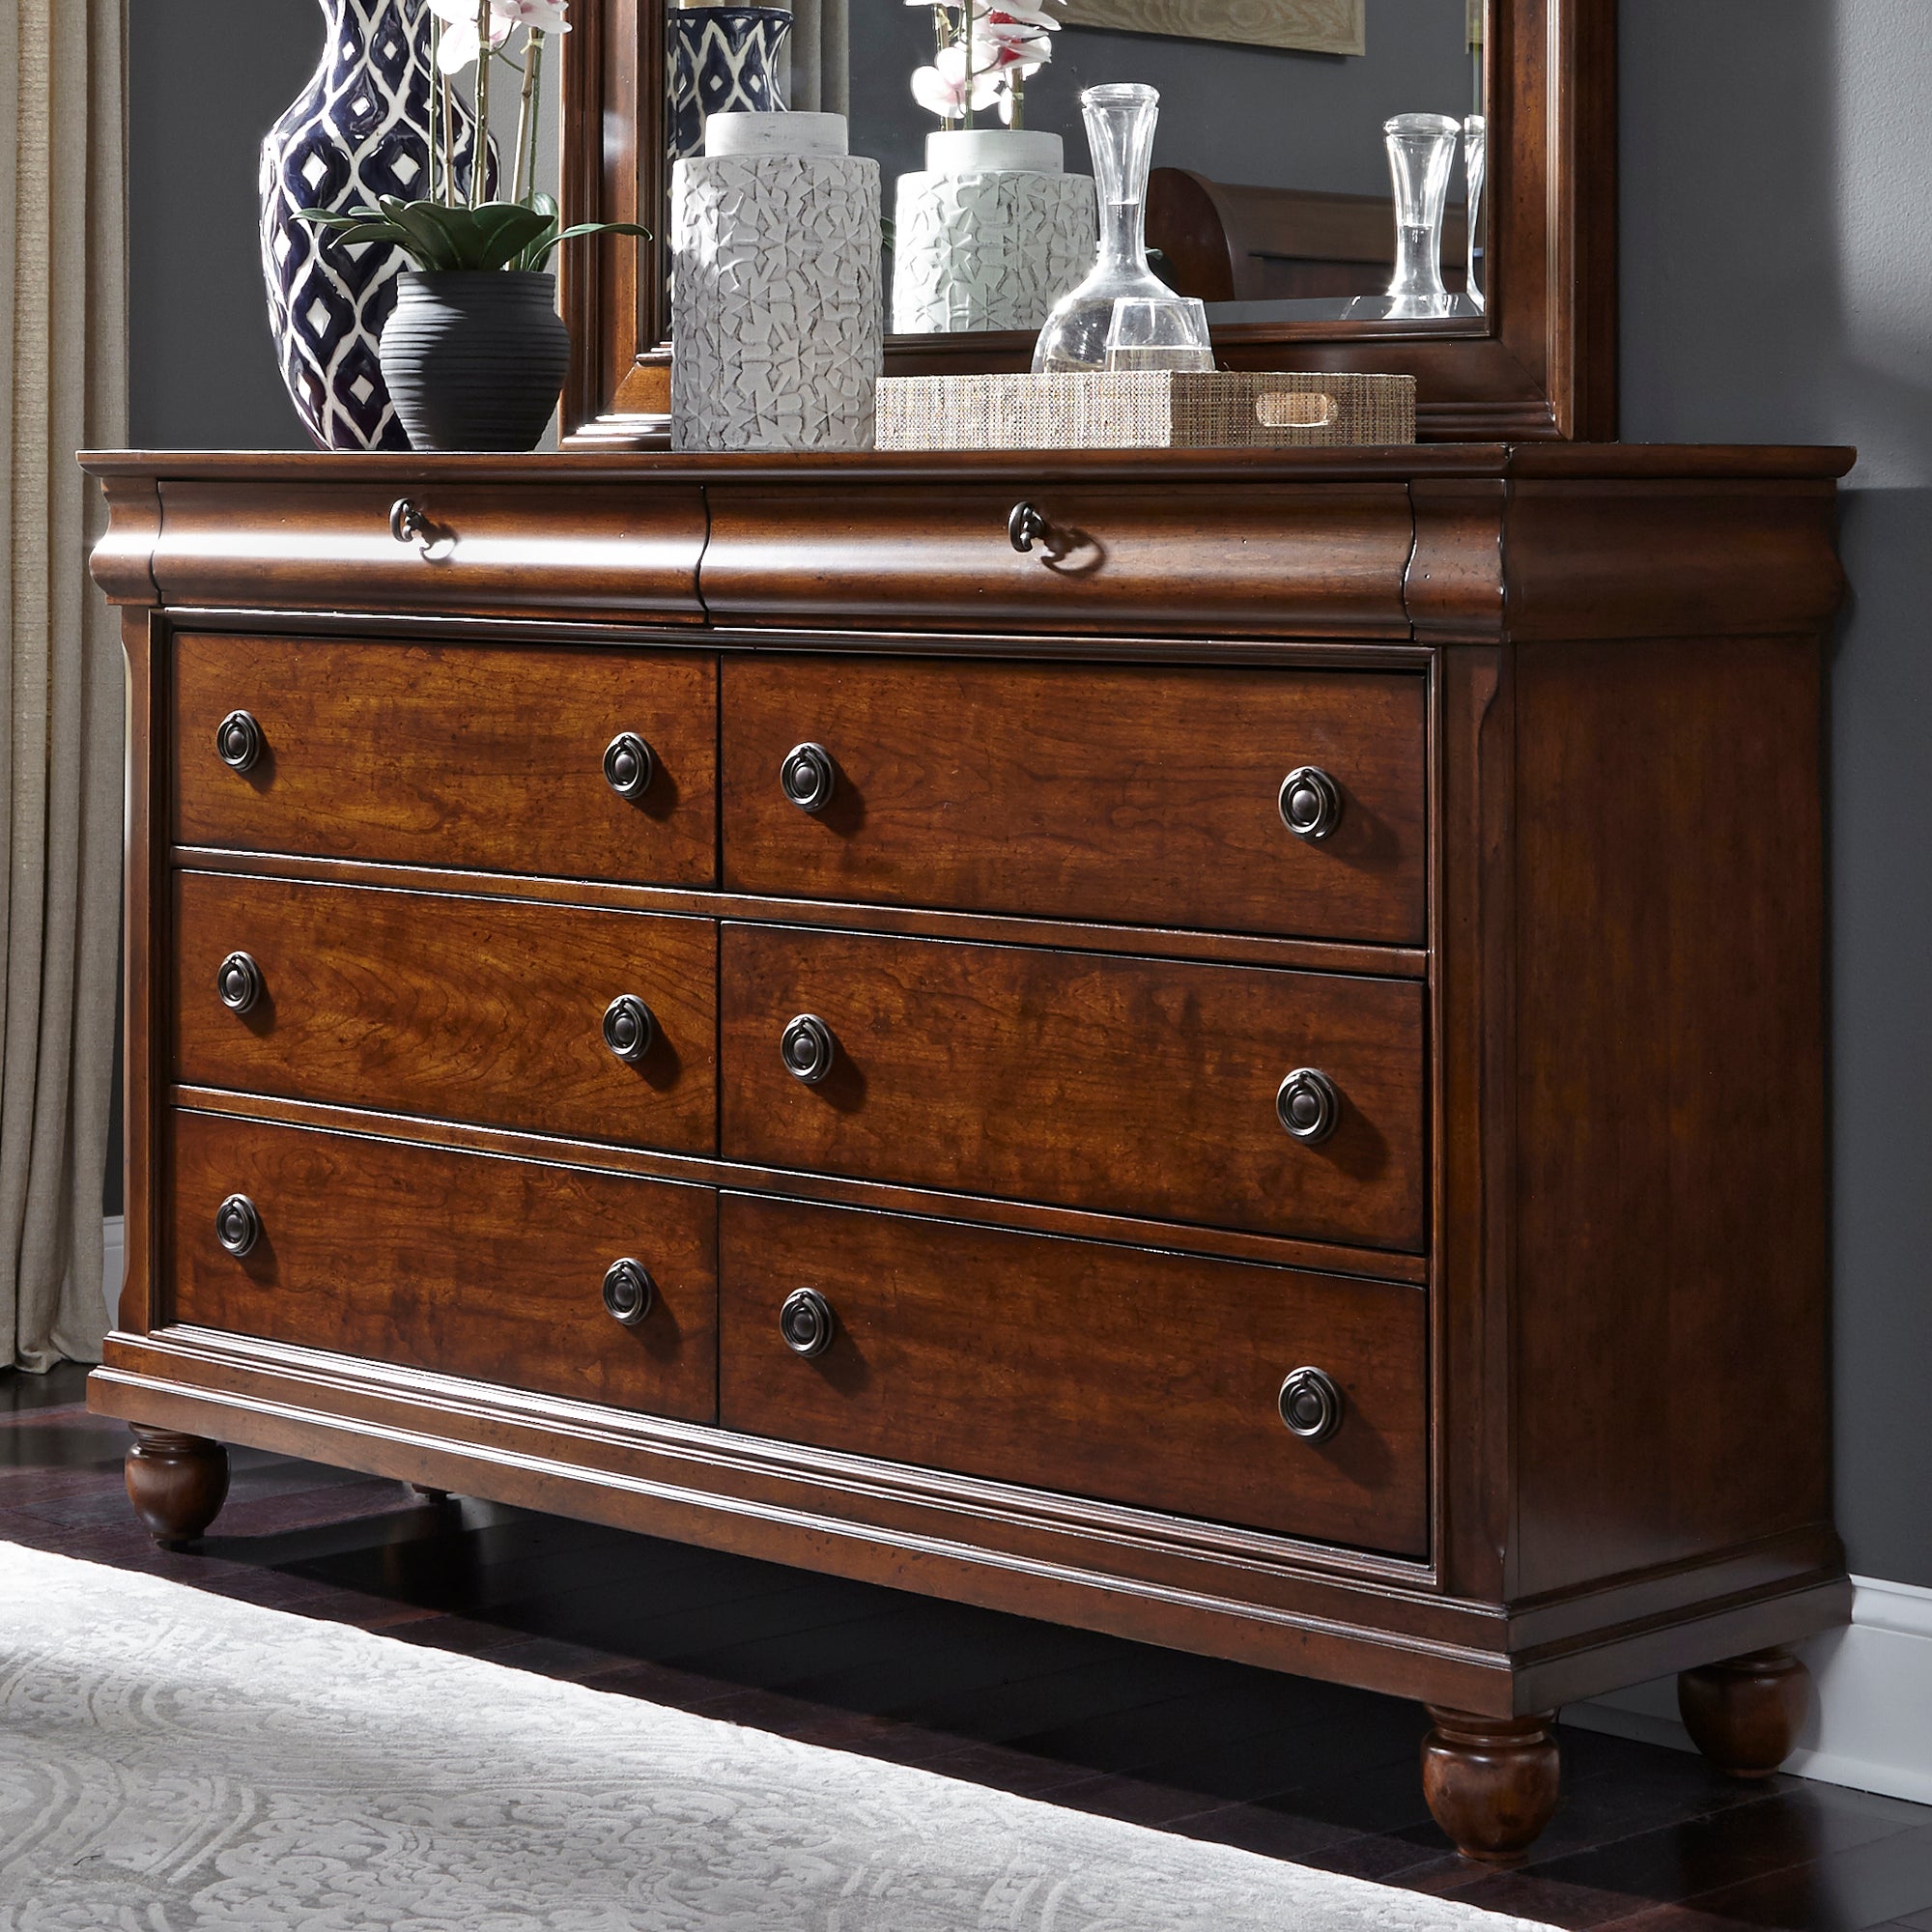 Liberty Furniture A589-BR31 8 Drawer Dresser